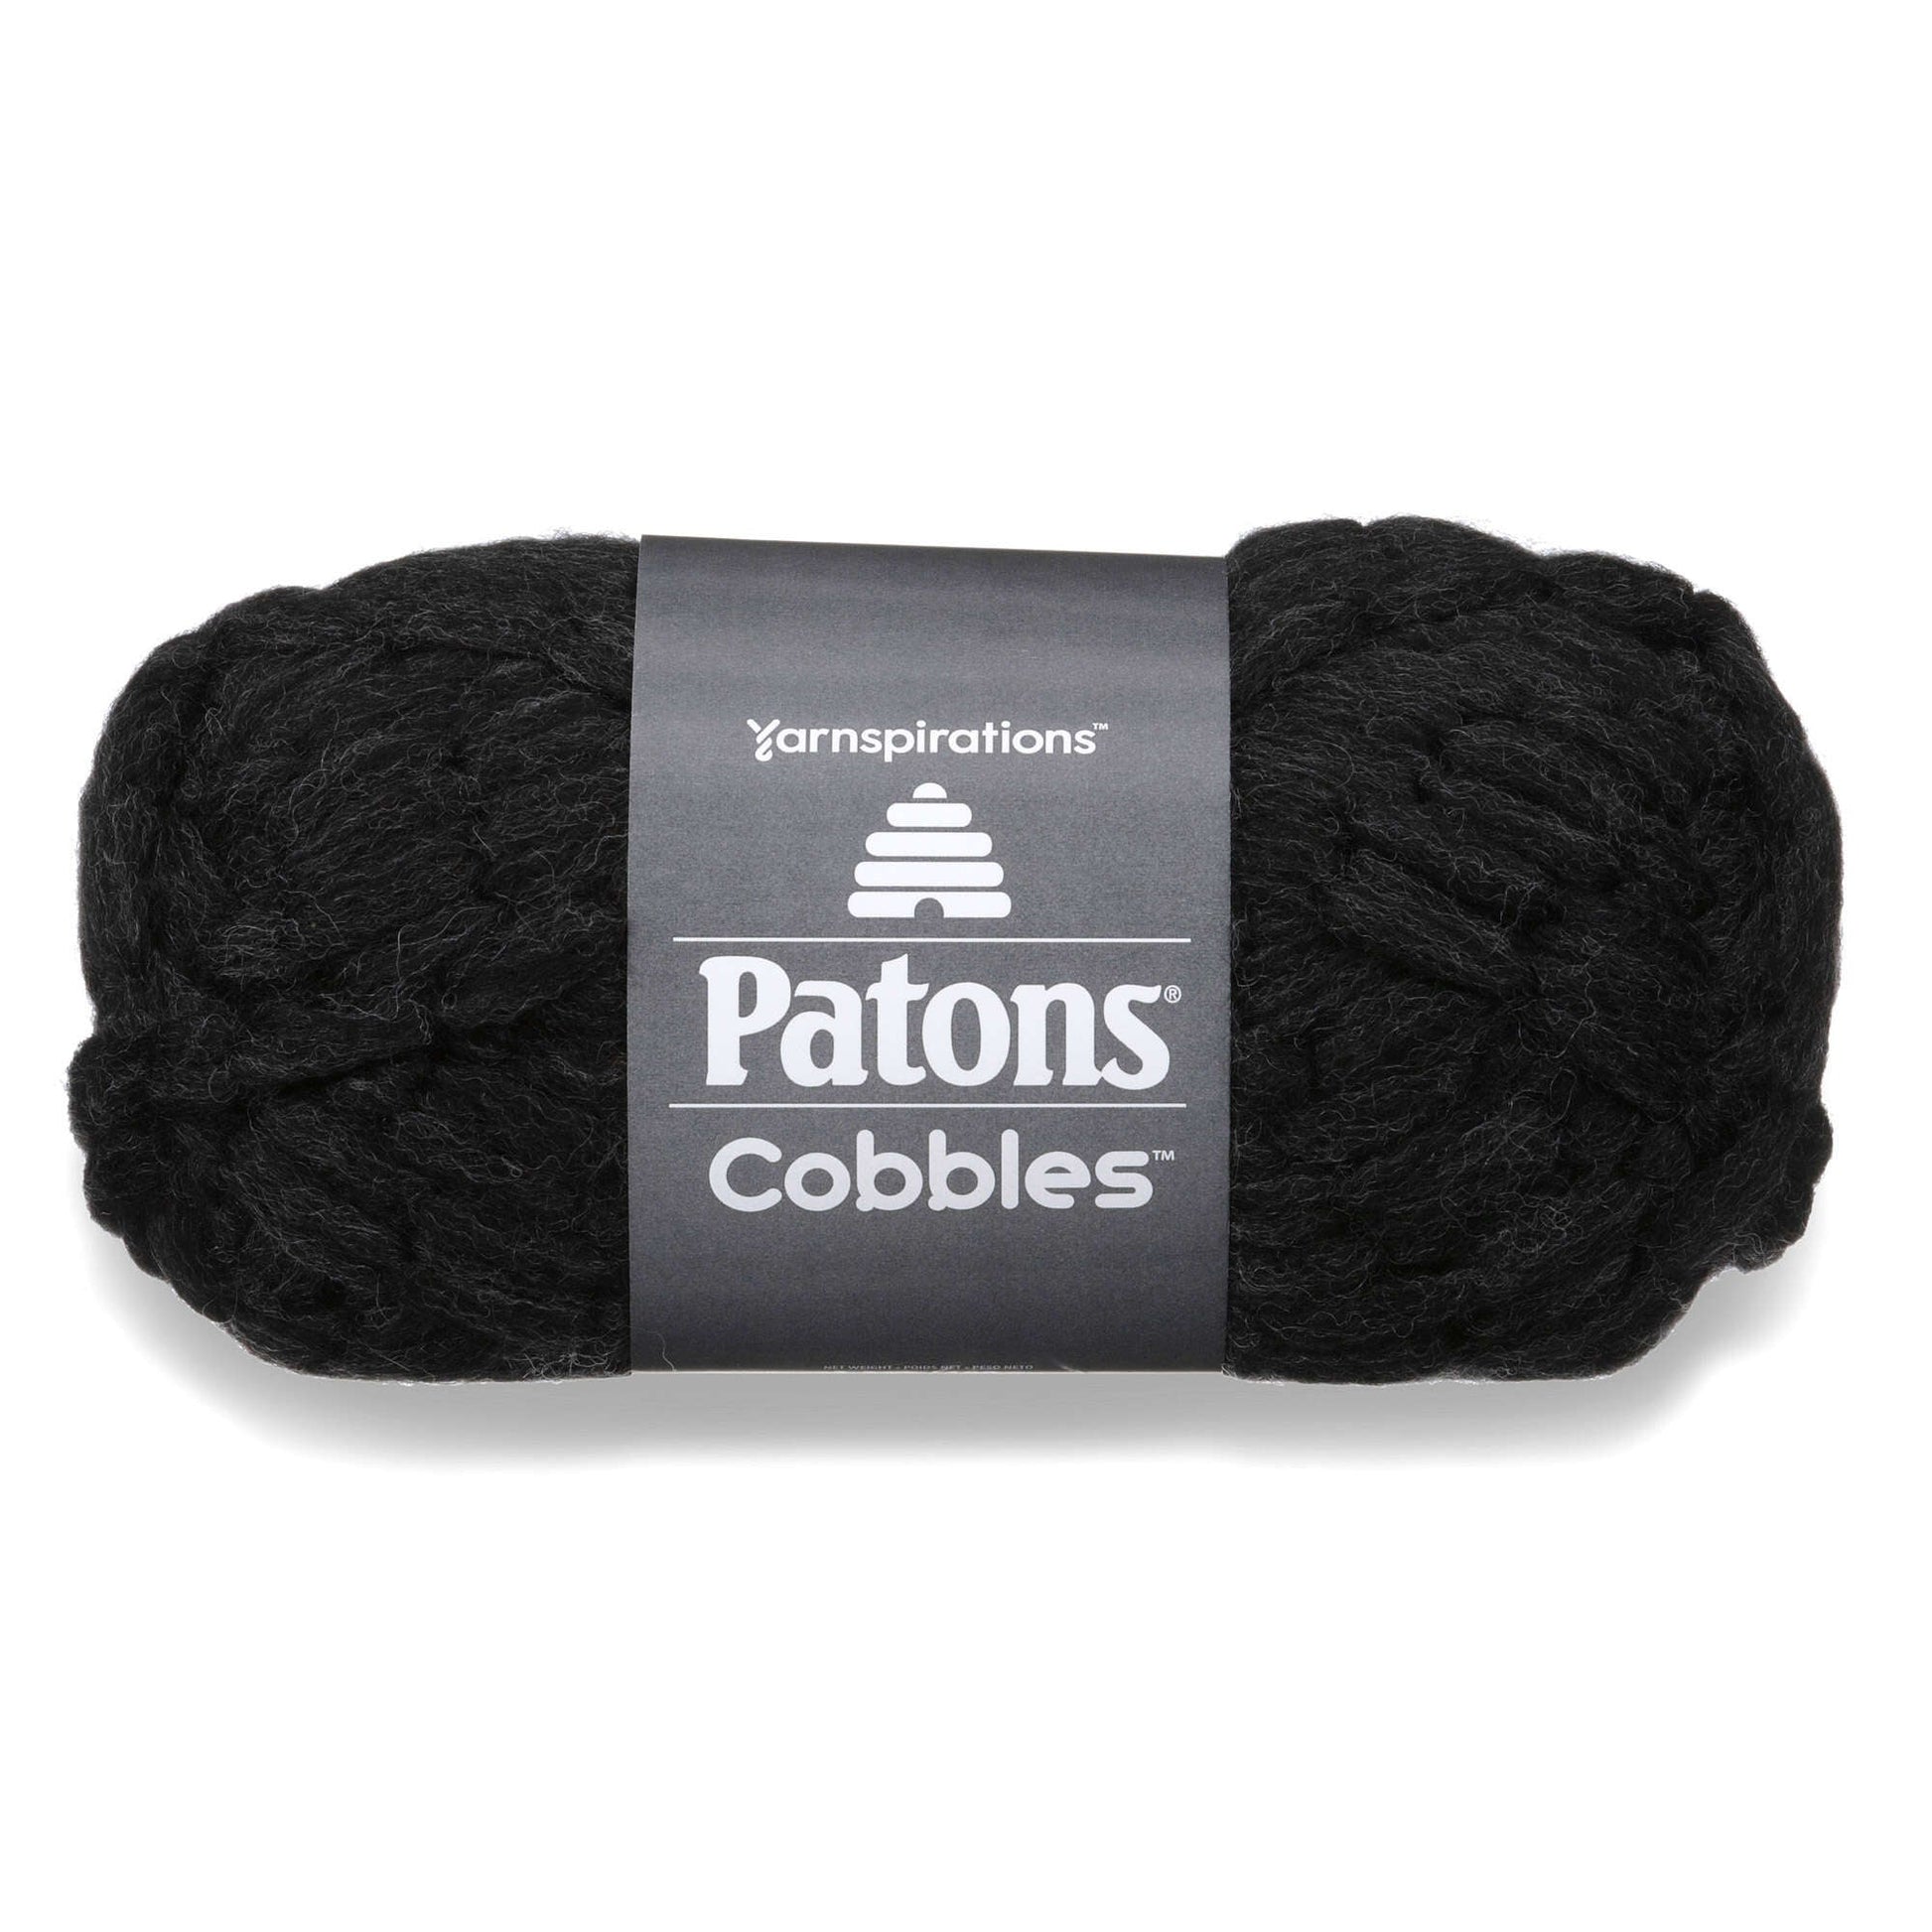 Patons Cobbles Yarn